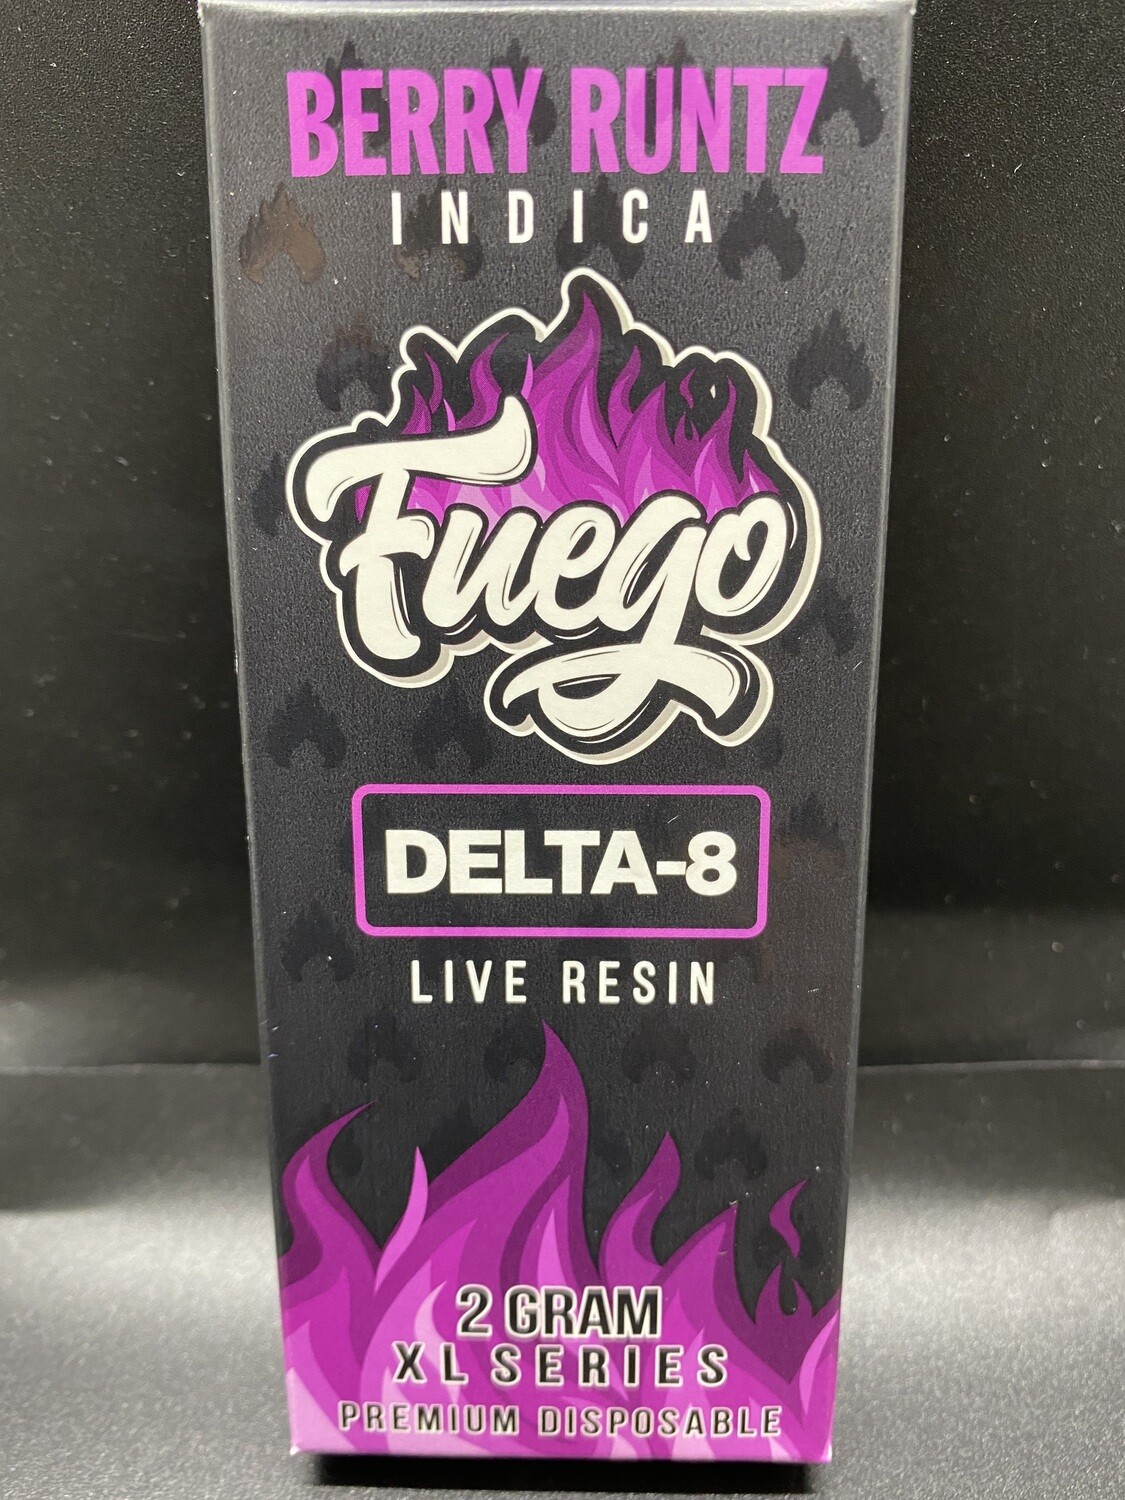 DISP - Fuego Live Resin Delta 8 Berry Runtz 2g